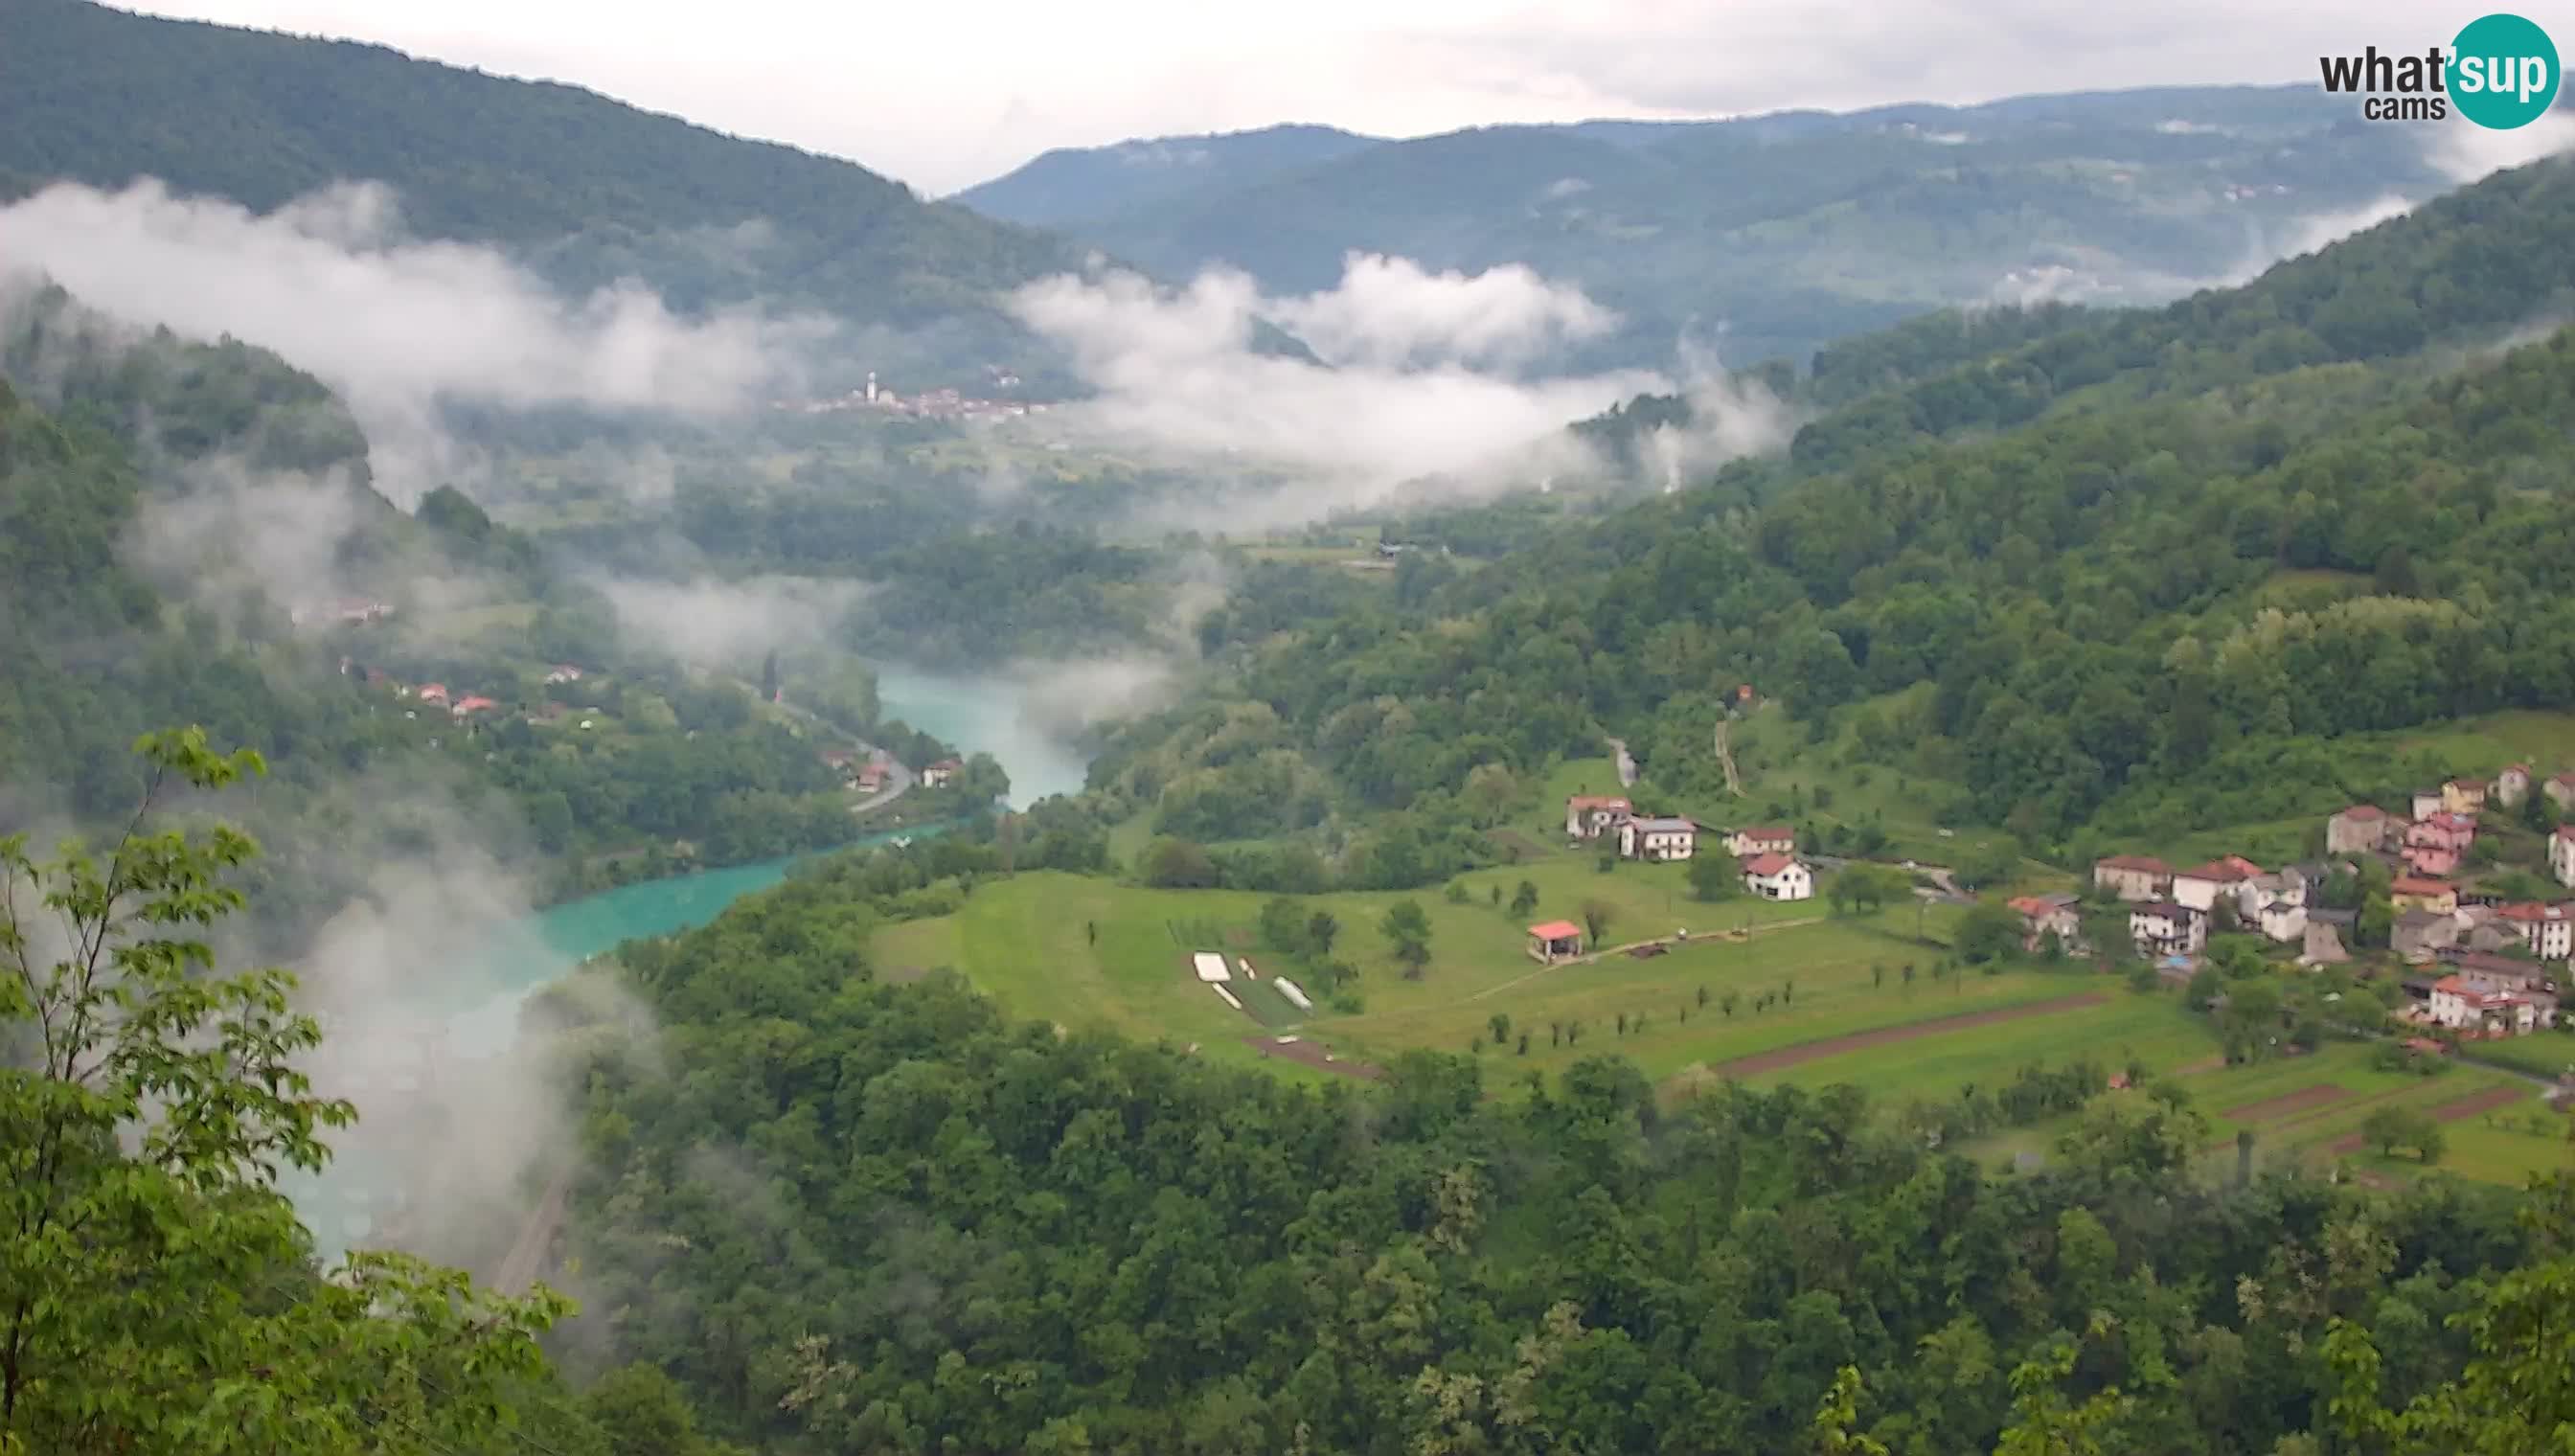 Camera en vivo Kanal ob Soči – Vue sur la rivière Soča, Ajba, Bodrež y Ročinj